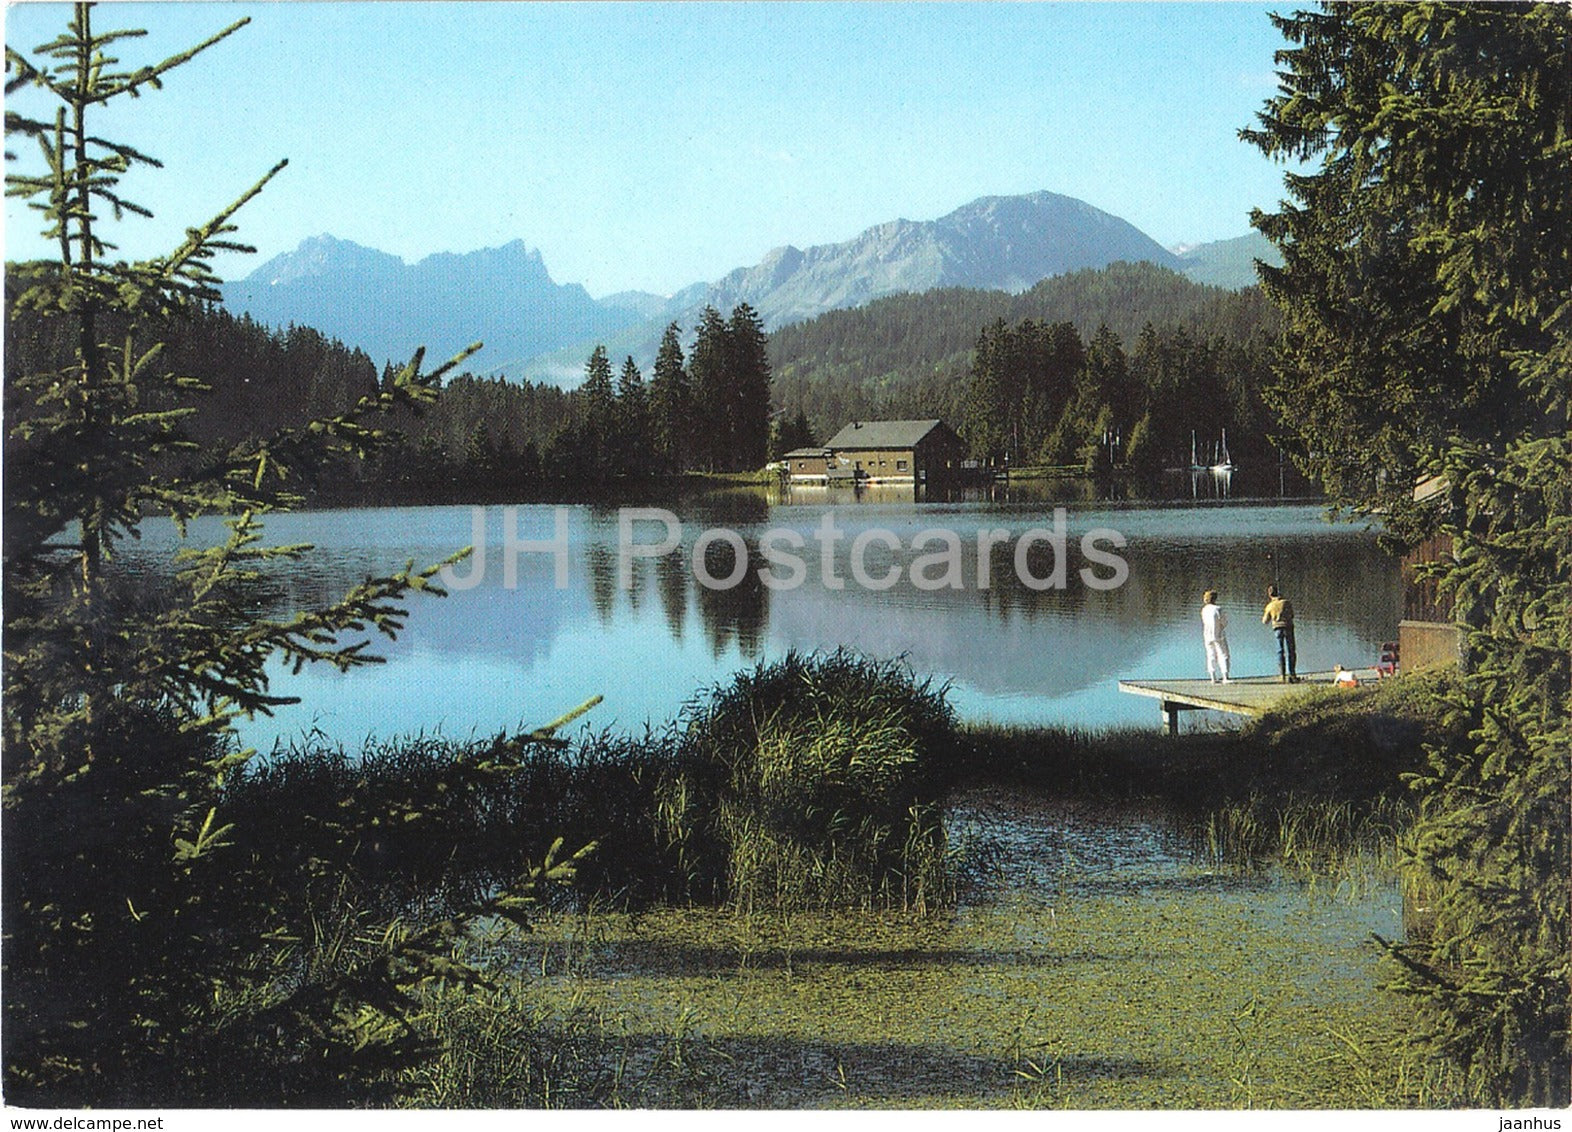 Lenzerheide 1500 m - Heidsee - 120 - 1995 - Switzerland - used - JH Postcards